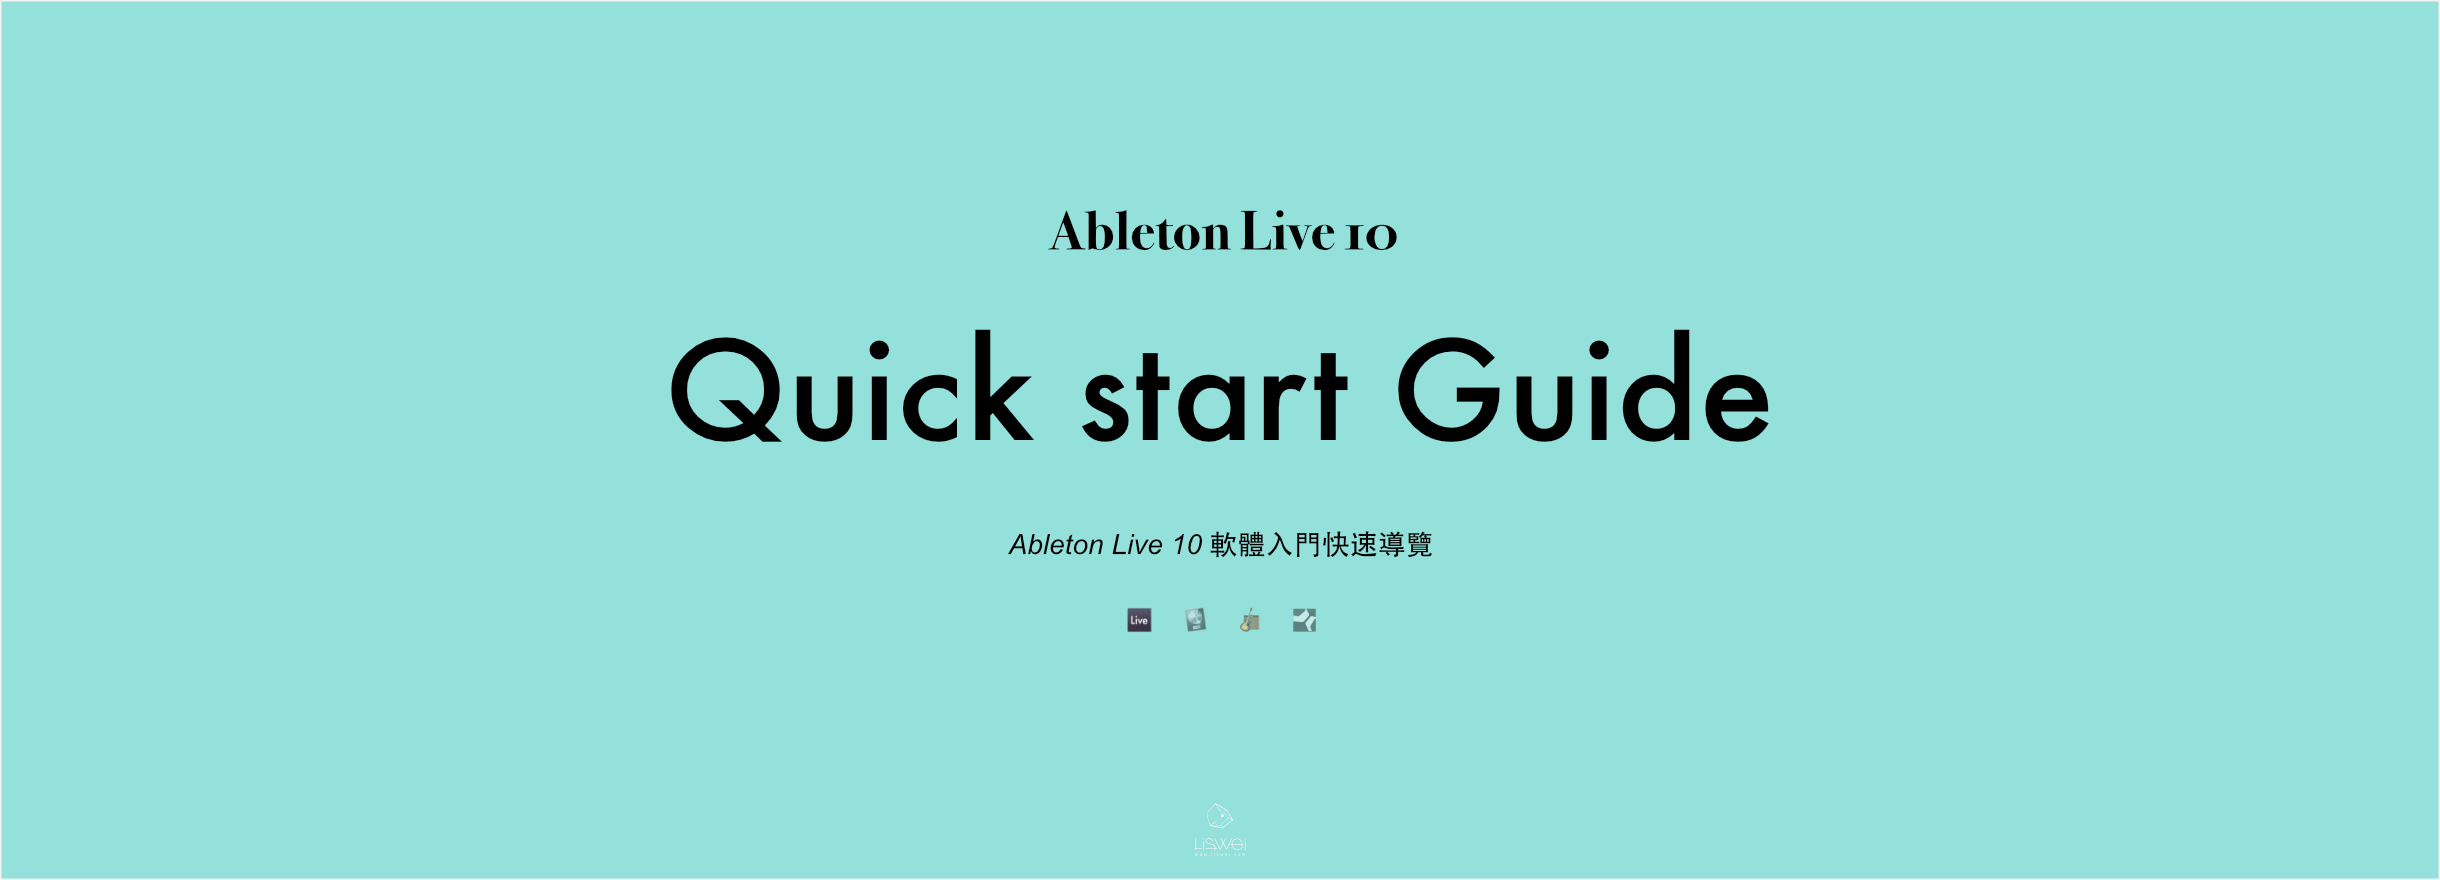 Ableton Live Quick Start